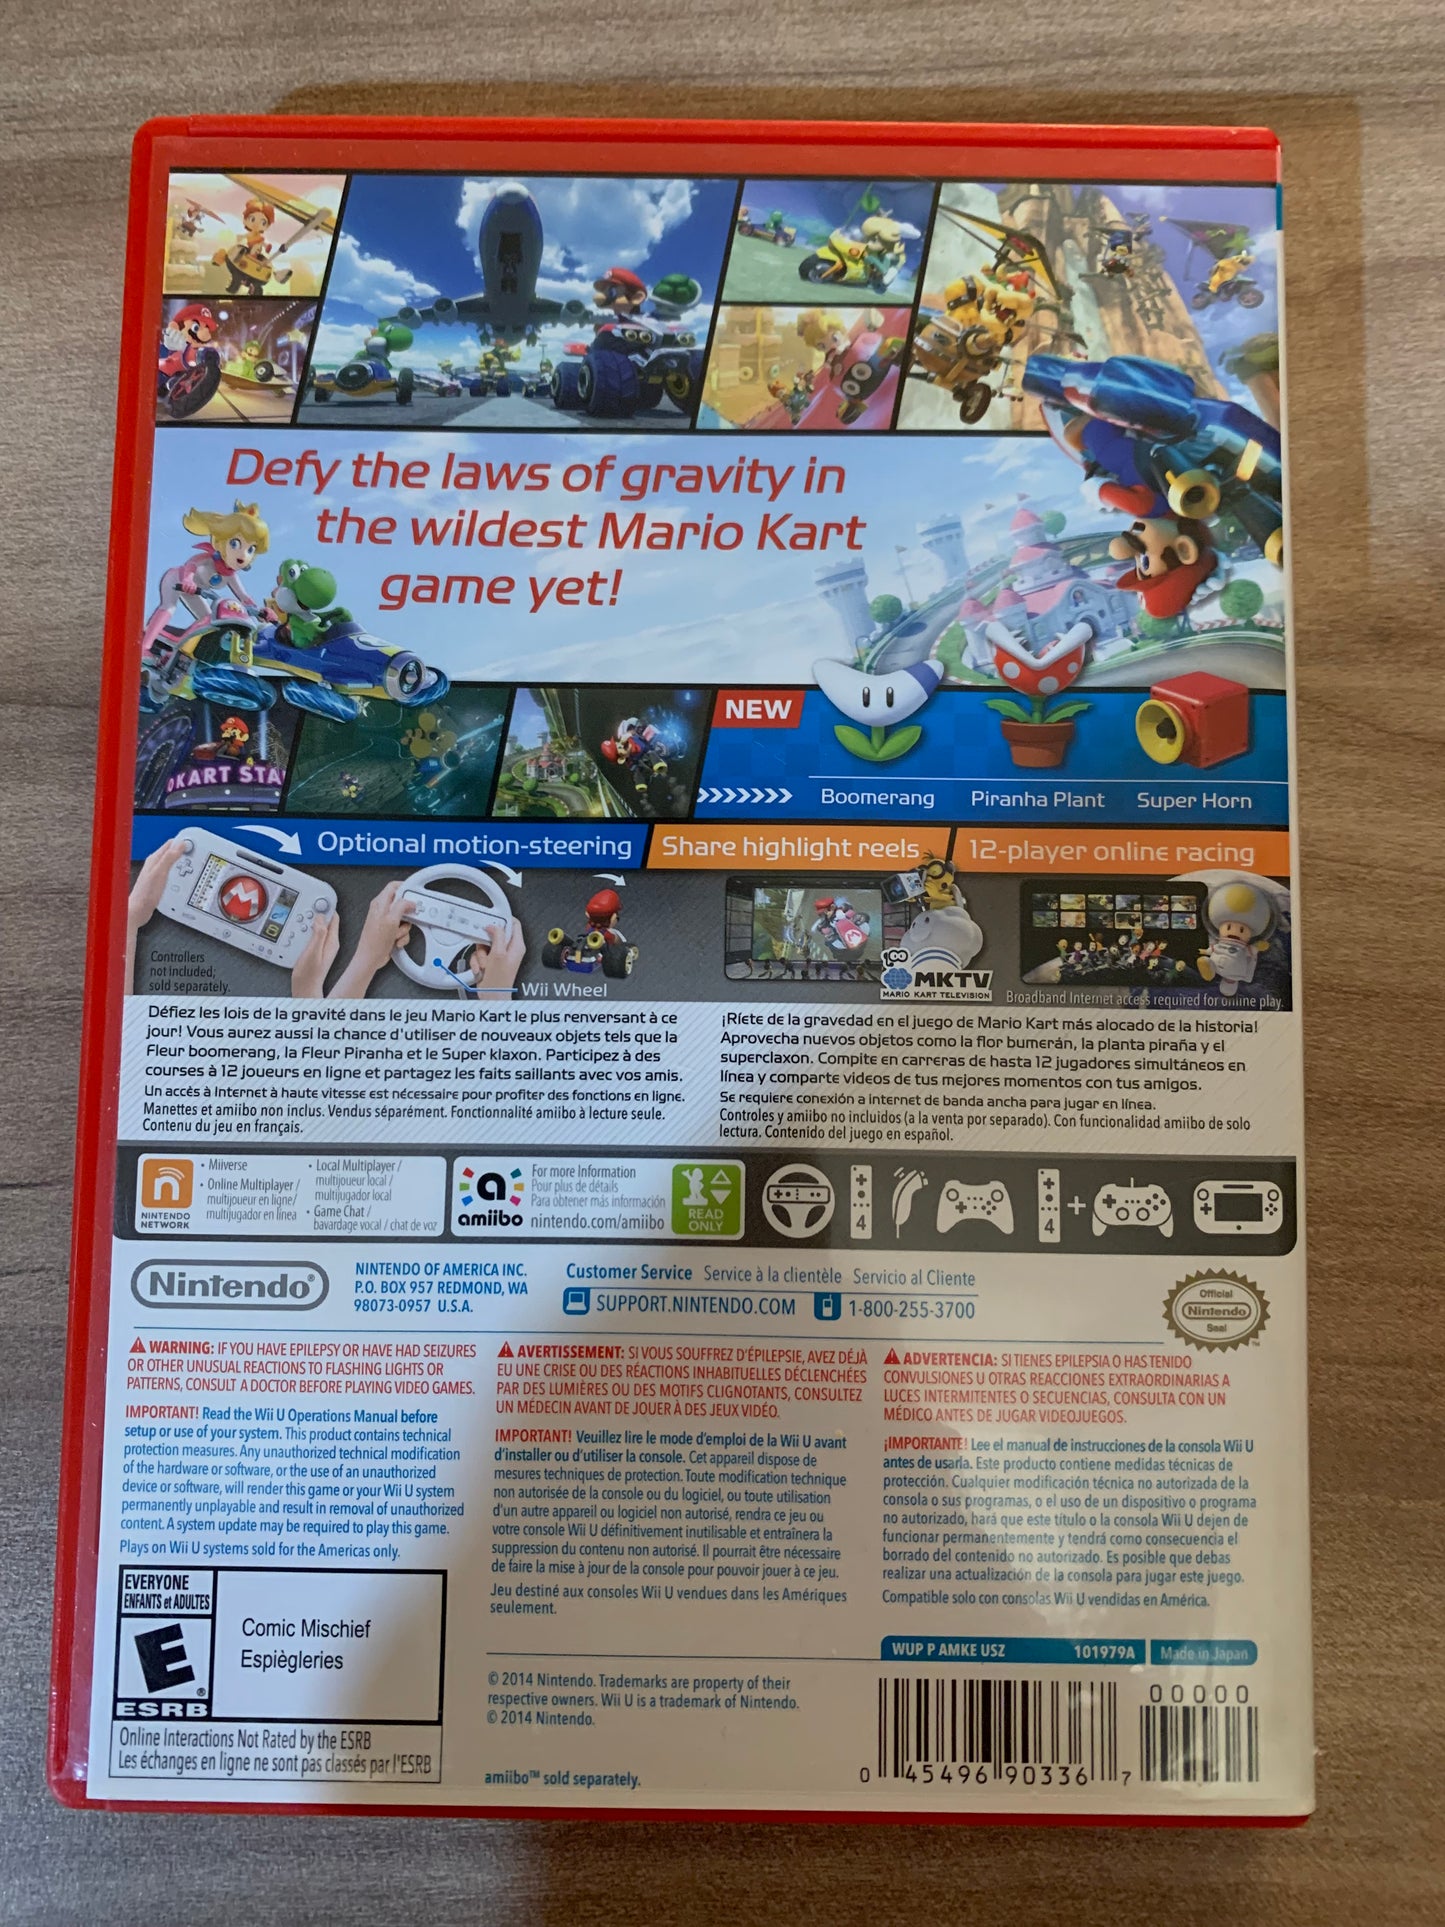 NiNTENDO Wii U | MARiO KART 8